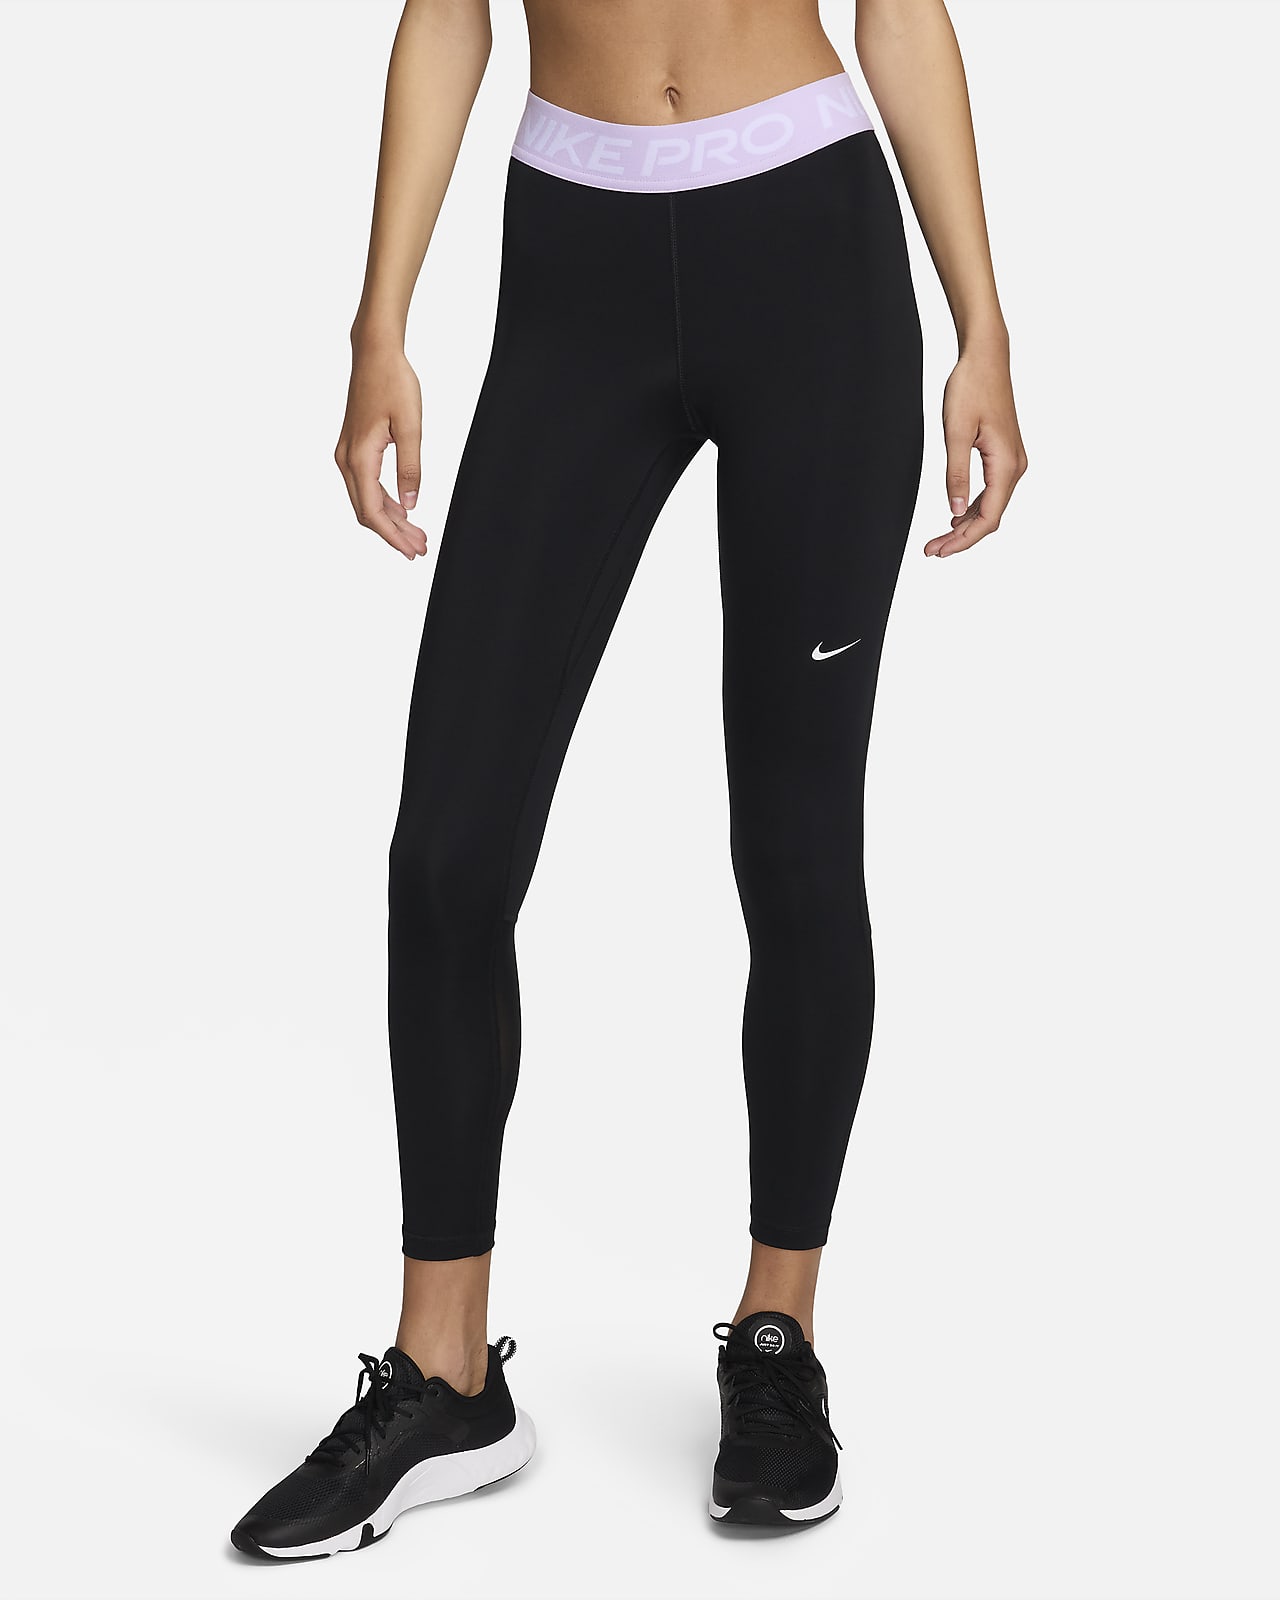 Nike Pro 365 7/8-legging met halfhoge taille voor dames